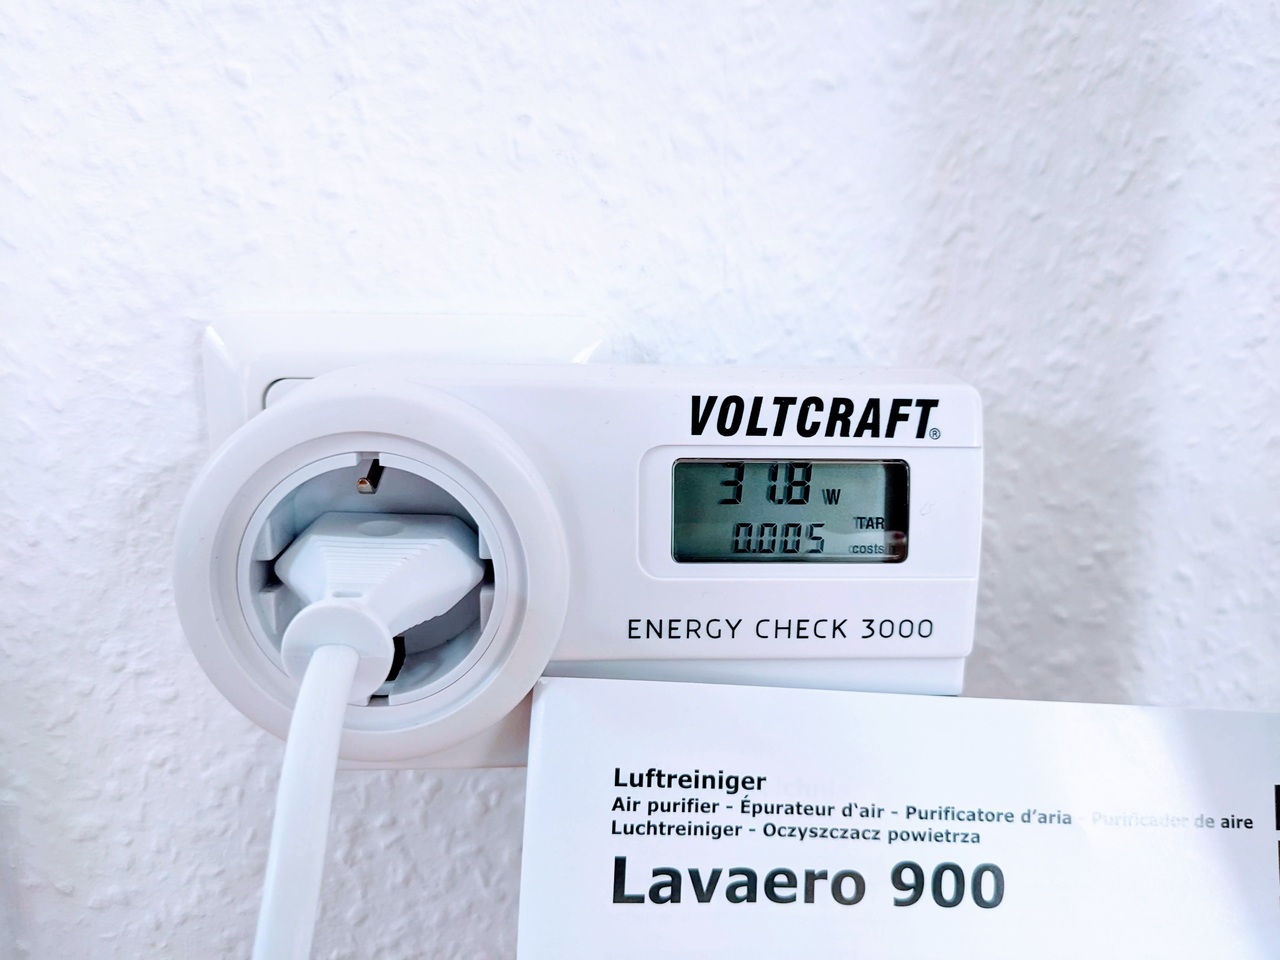 Comedes Lavaero 900: Lüfterstufe II: Energieverbrauch 31,8 Watt